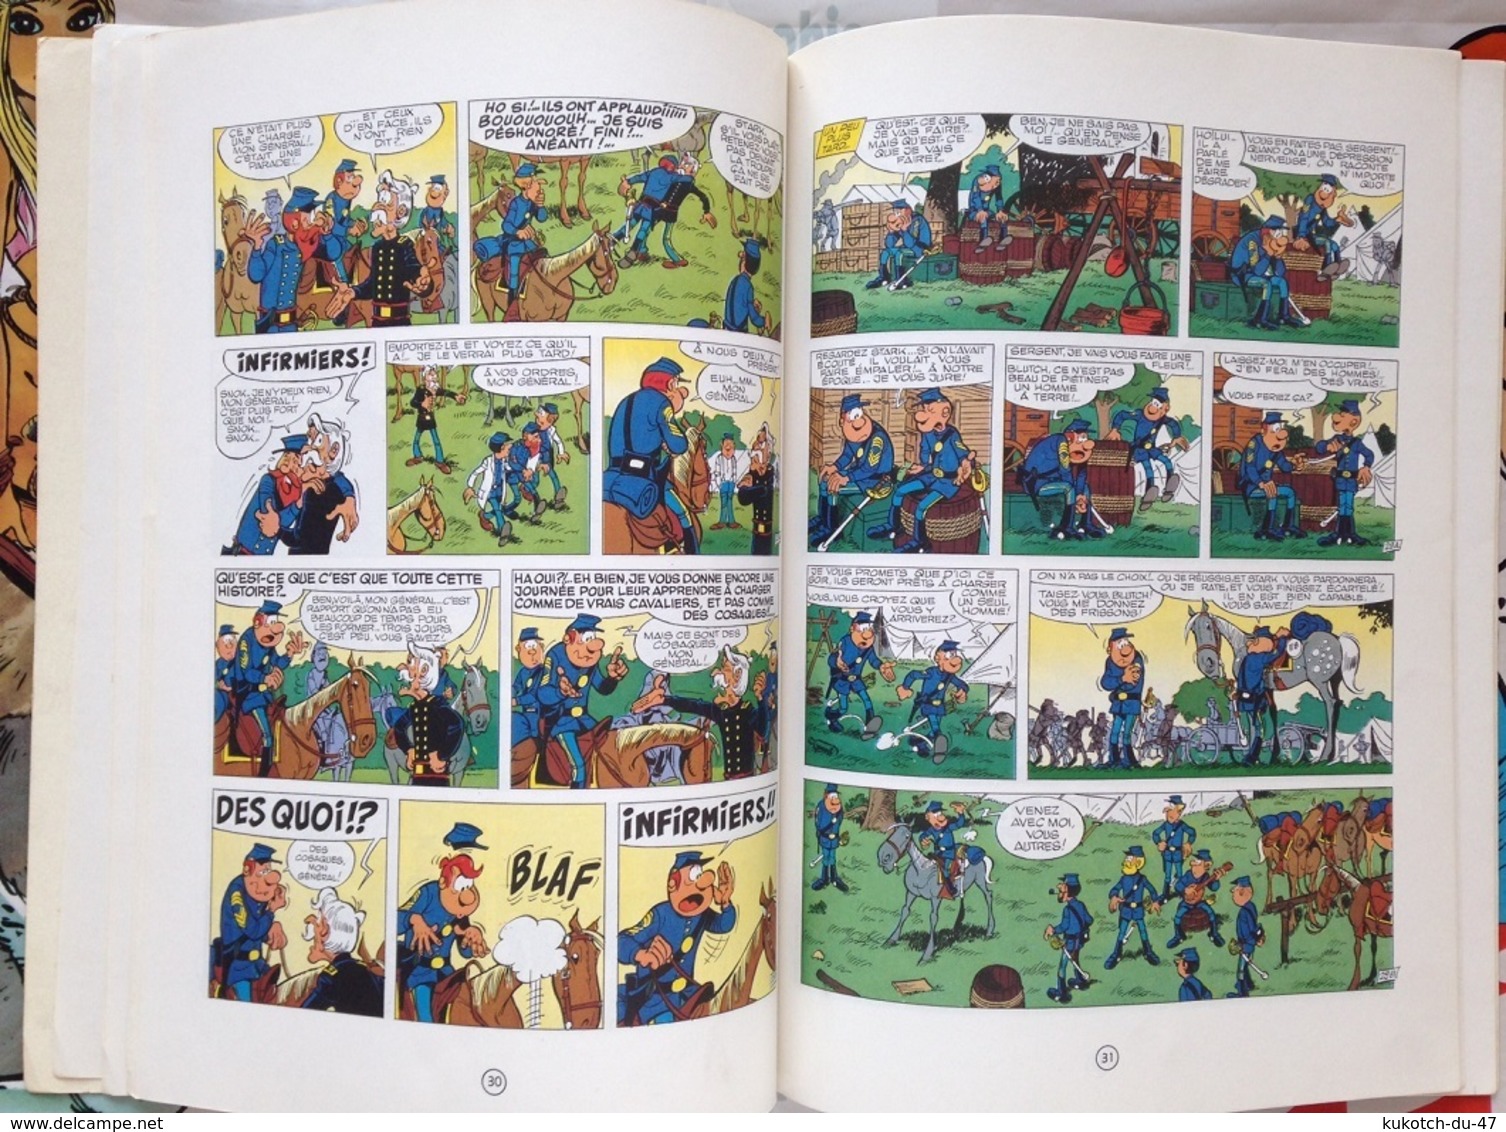 BD Tuniques bleues - Les bleus tournent cosaques - Tome 12 (1982)